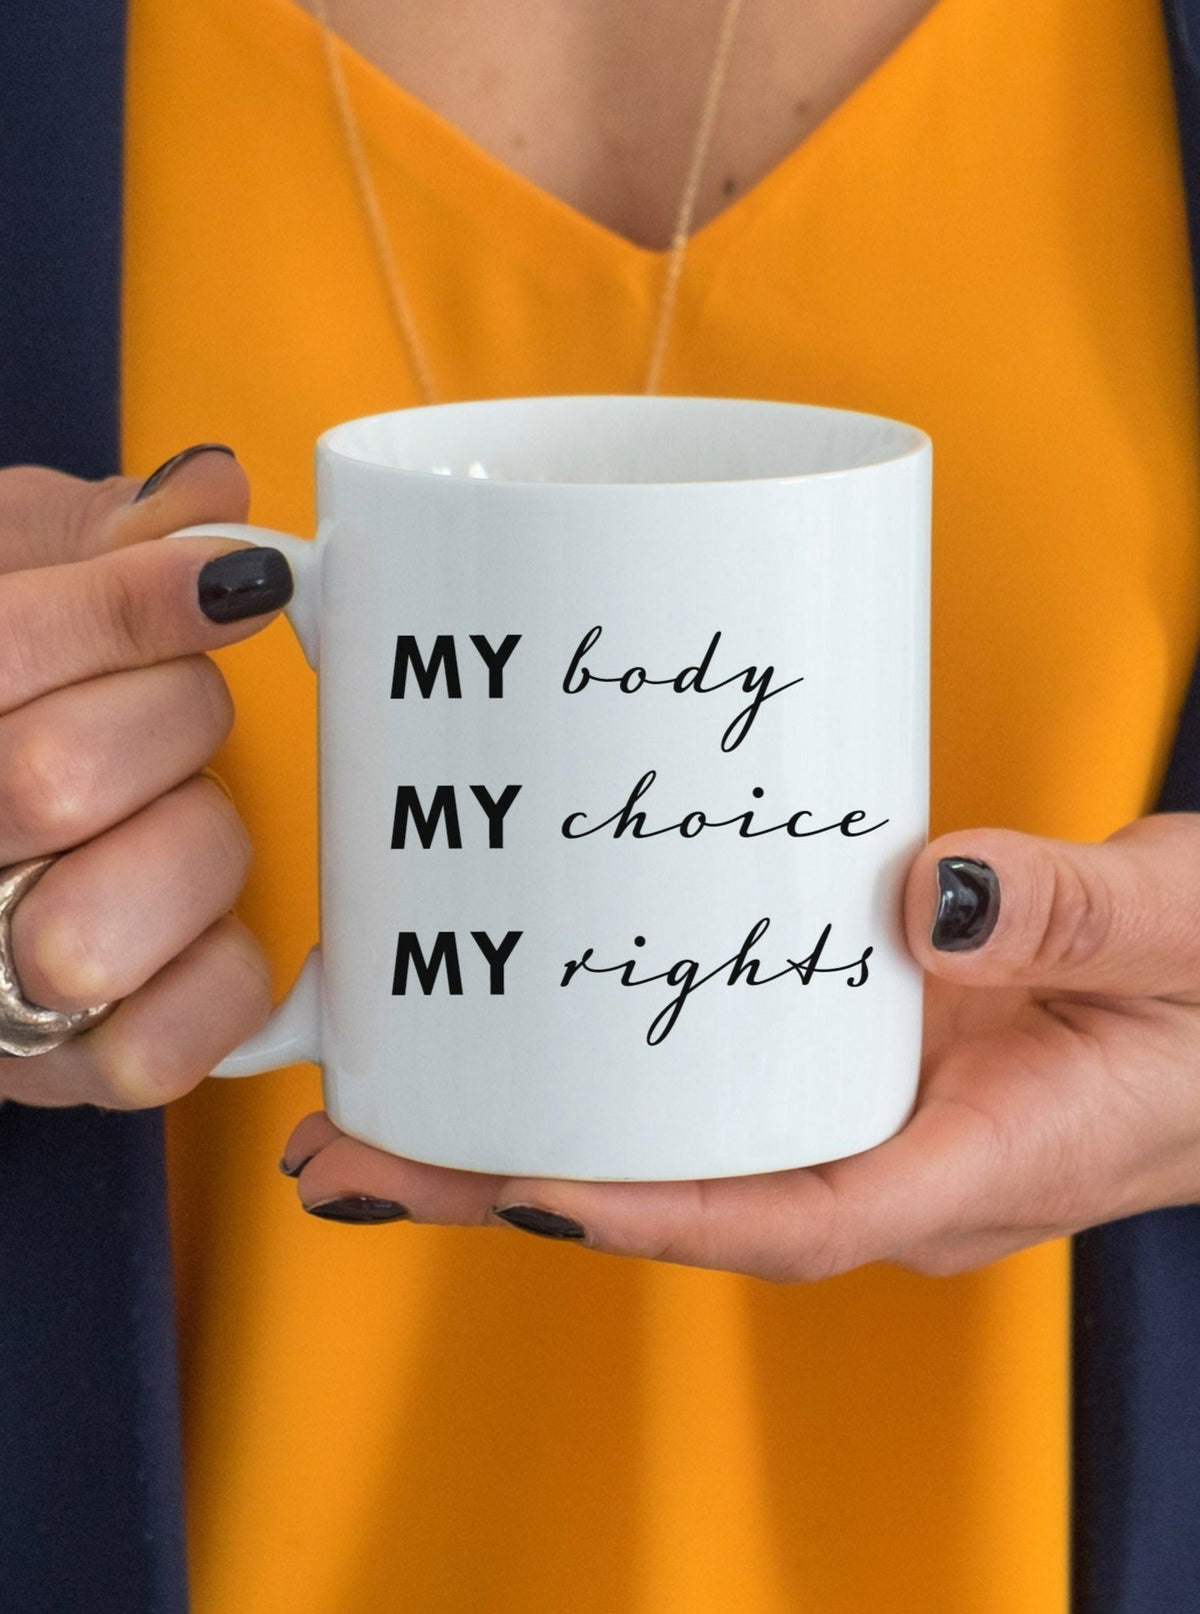 My Body My Choice My Rights Coffee Mug Gift,Pro Choice Mug,Women's Rights Gift,Feminist Gift,Reproductive Rights Gift,Protect Roe v Wade